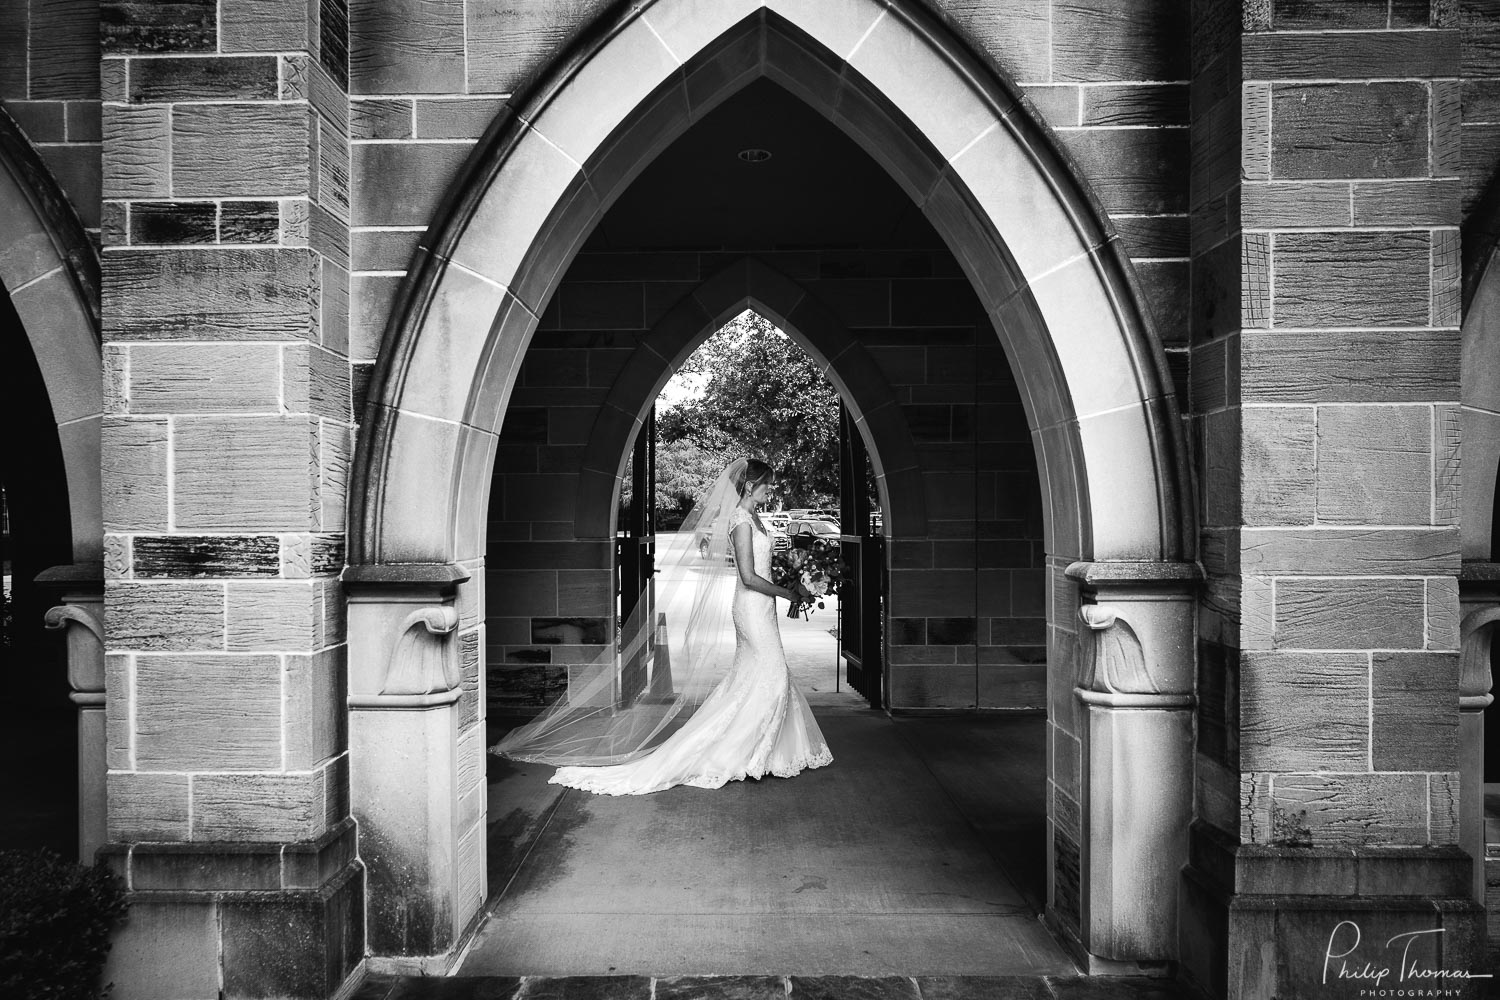 Wedding-ceremony-at-Holy-Rosary-Catholic-Church-and-reception-in-houston-Texas-Leica-photographer-Philip-Thomas-Photography